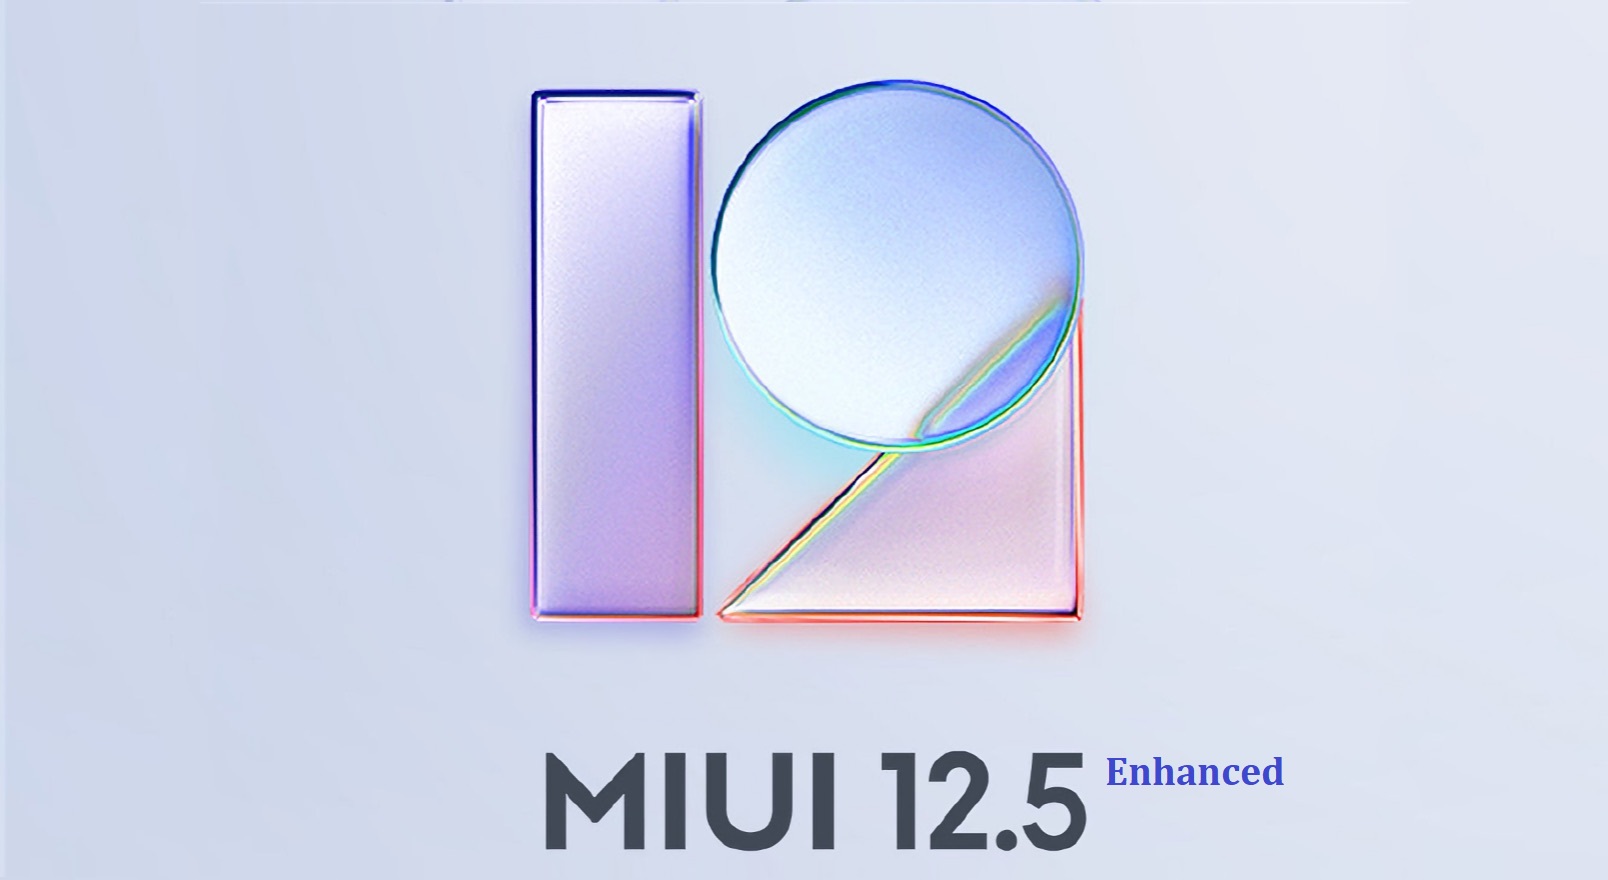 Xiaomi introduced the optimized firmware MIUI 12.5 Enhanced